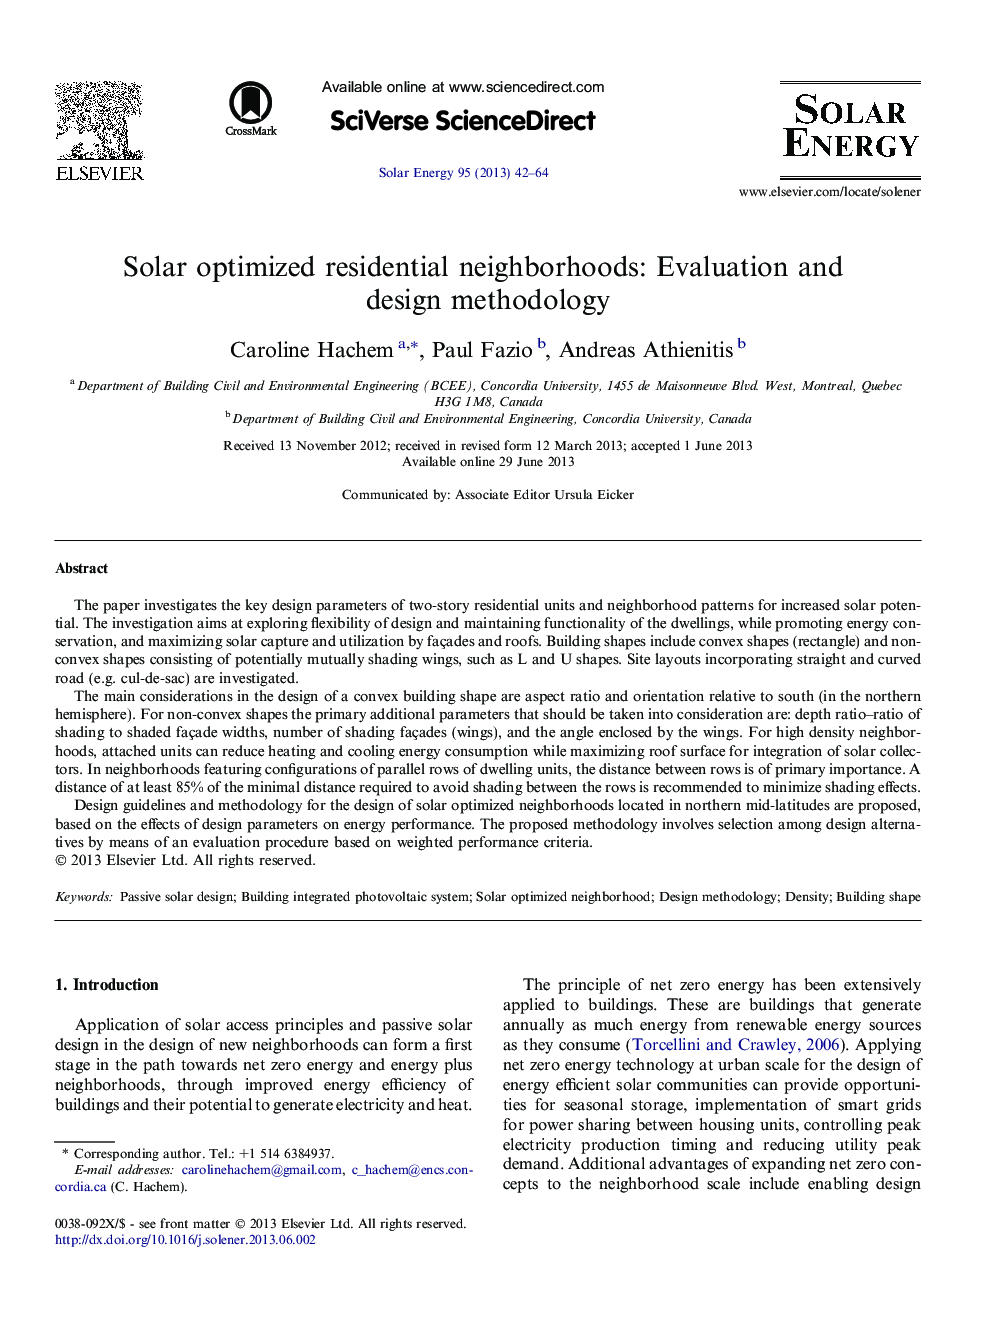 Solar optimized residential neighborhoods: Evaluation and design methodology